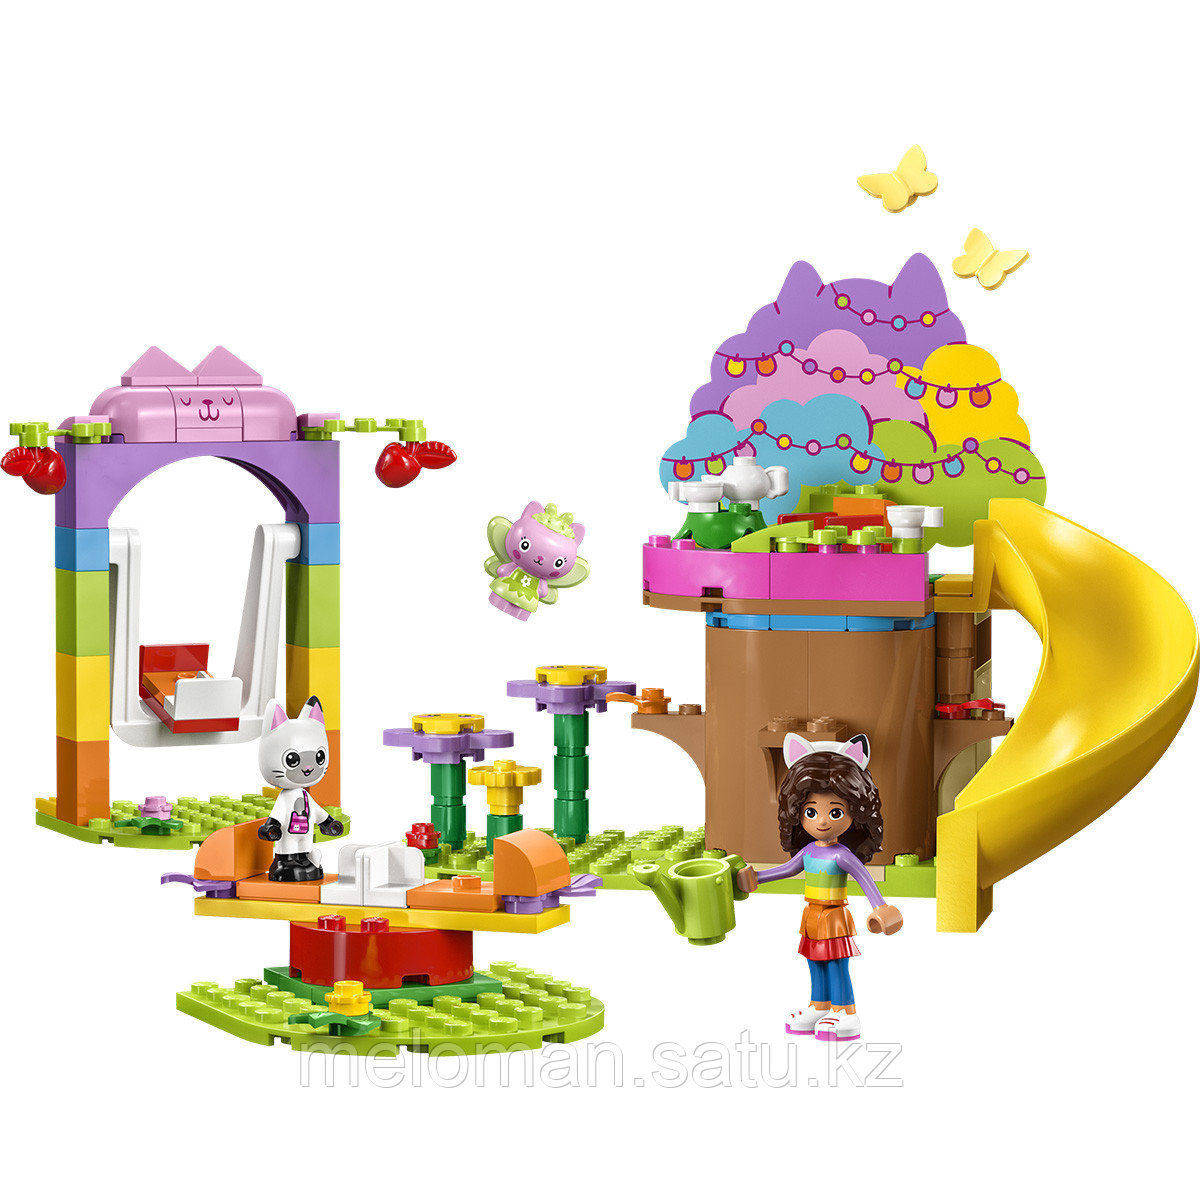 LEGO: Вечеринка в саду Феи Китти Gabby's Dollhouse 10787